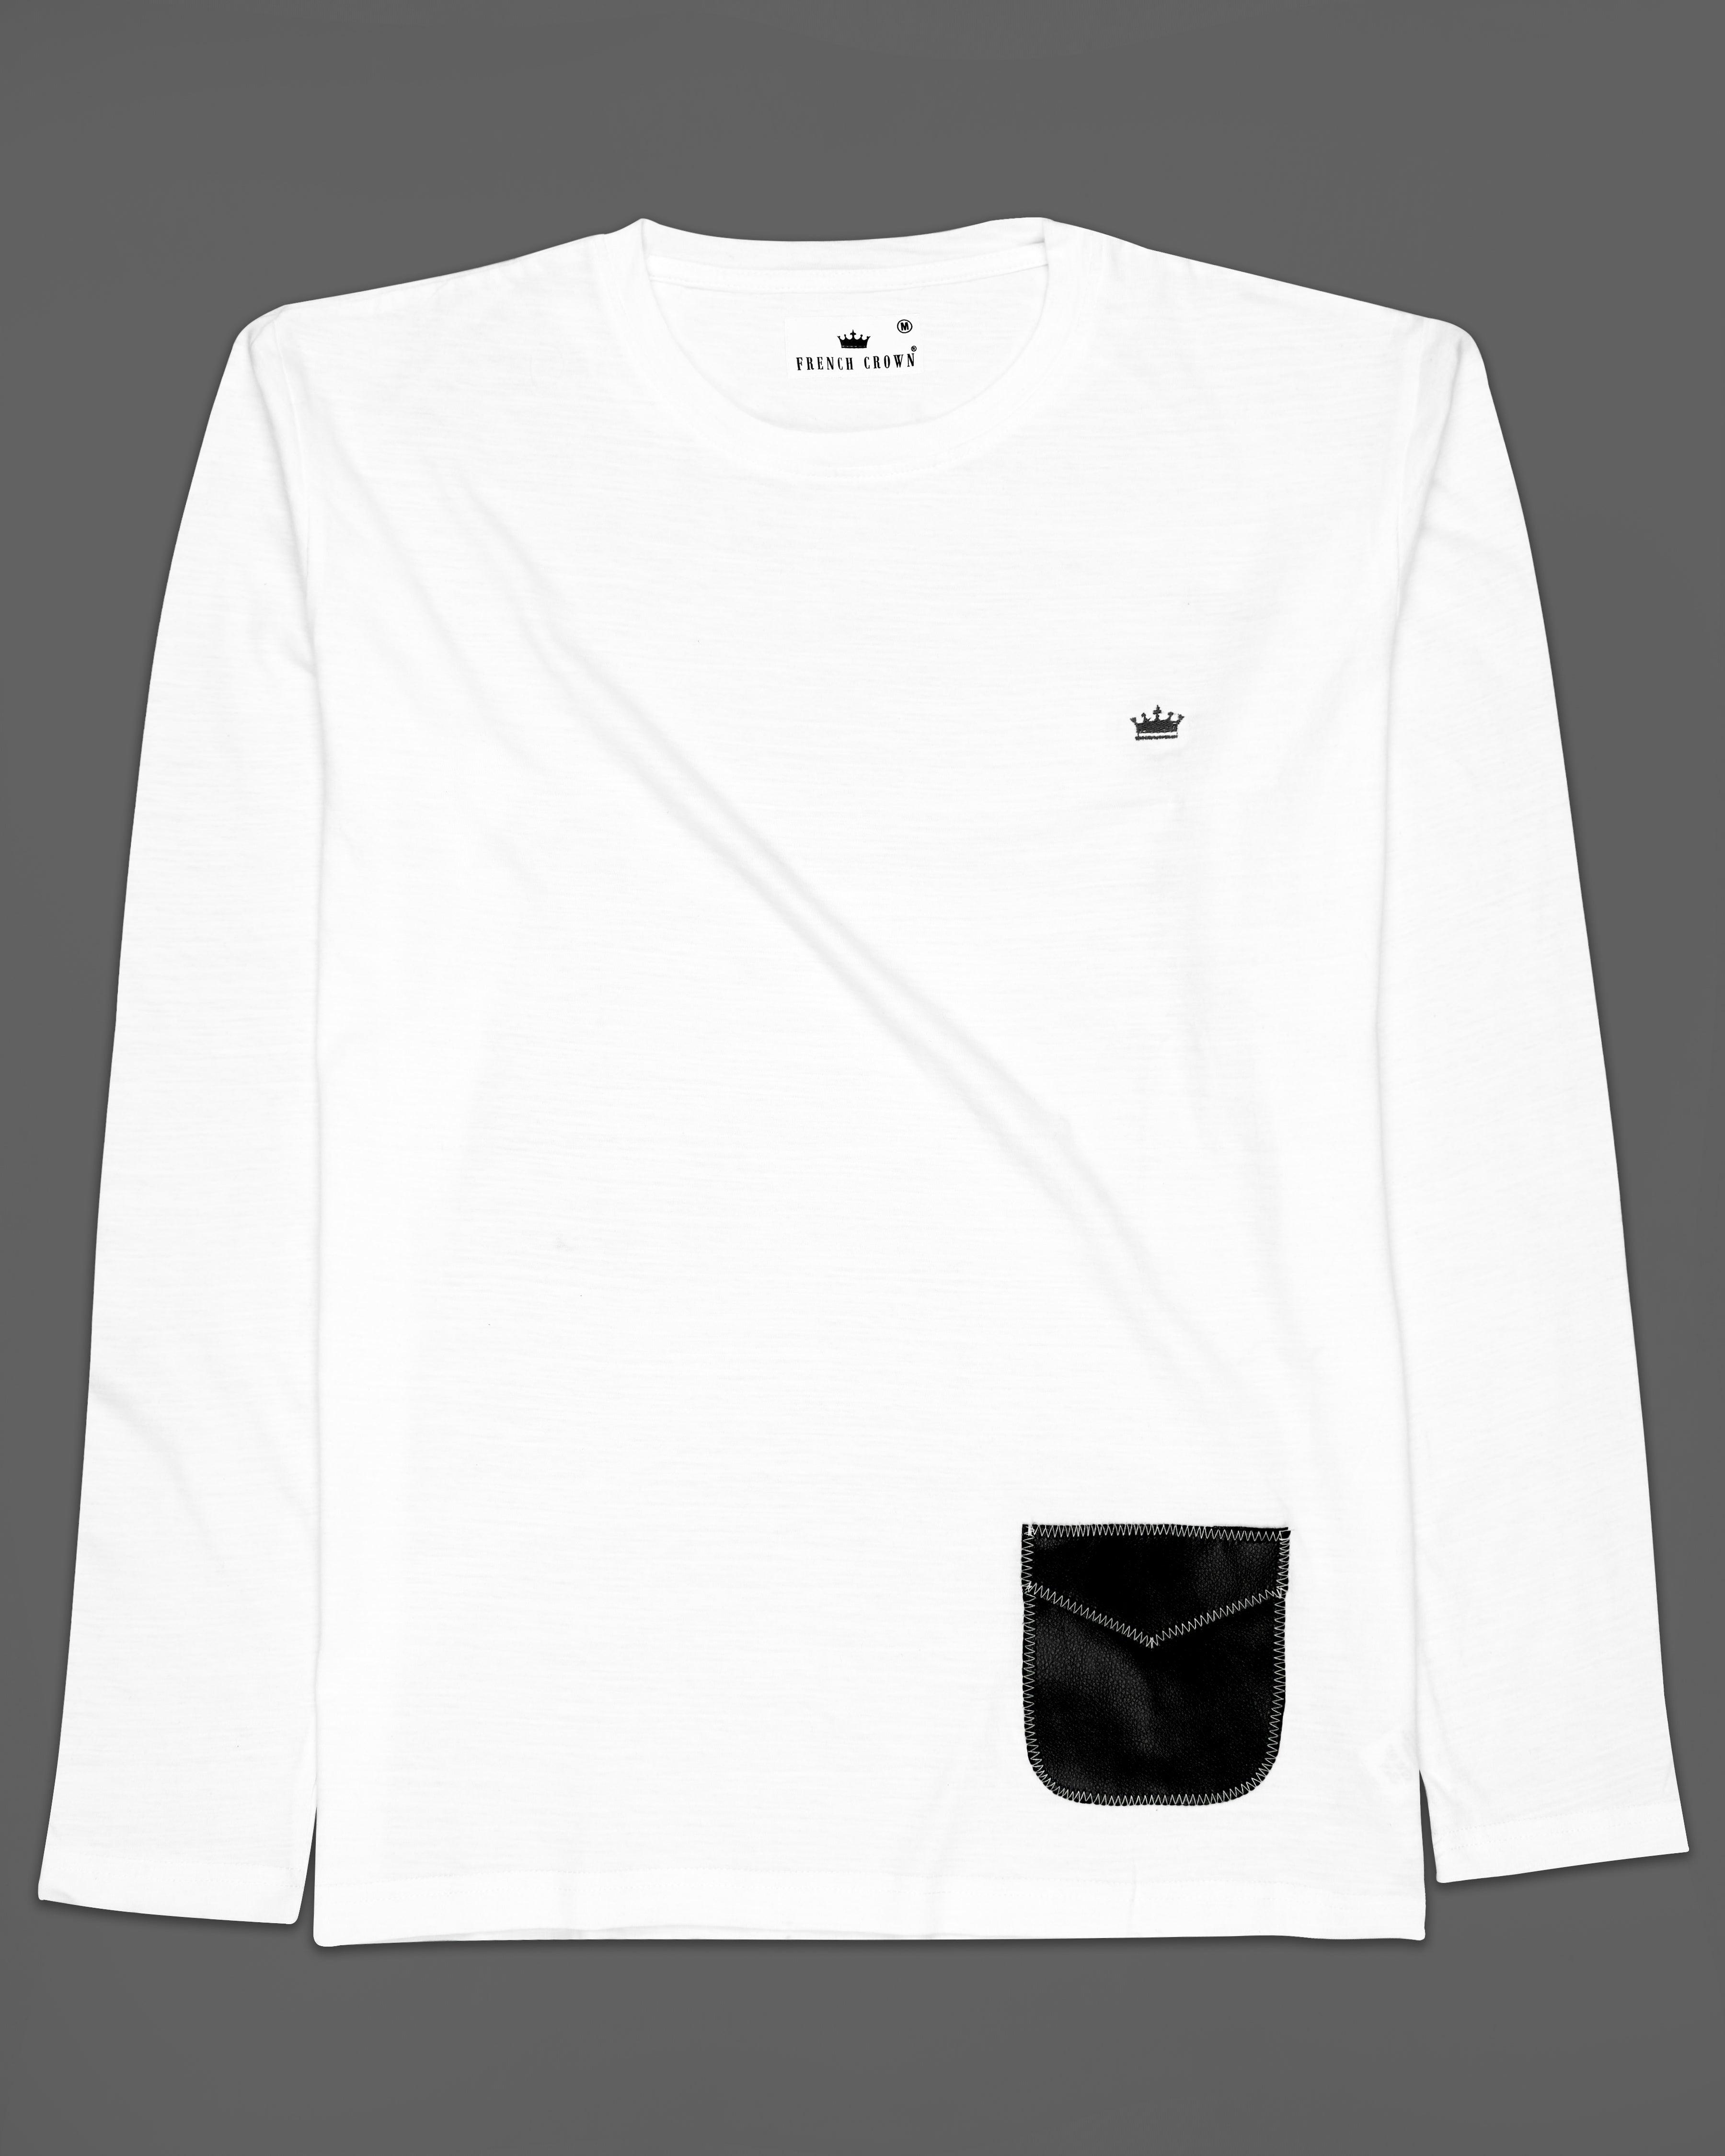 Bright White With Leather Nonfunctional Patch pocket Organic Cotton T-Shirt TS144-W02-S, TS144-W02-M, TS144-W02-L, TS144-W02-XL, TS144-W02-XXL